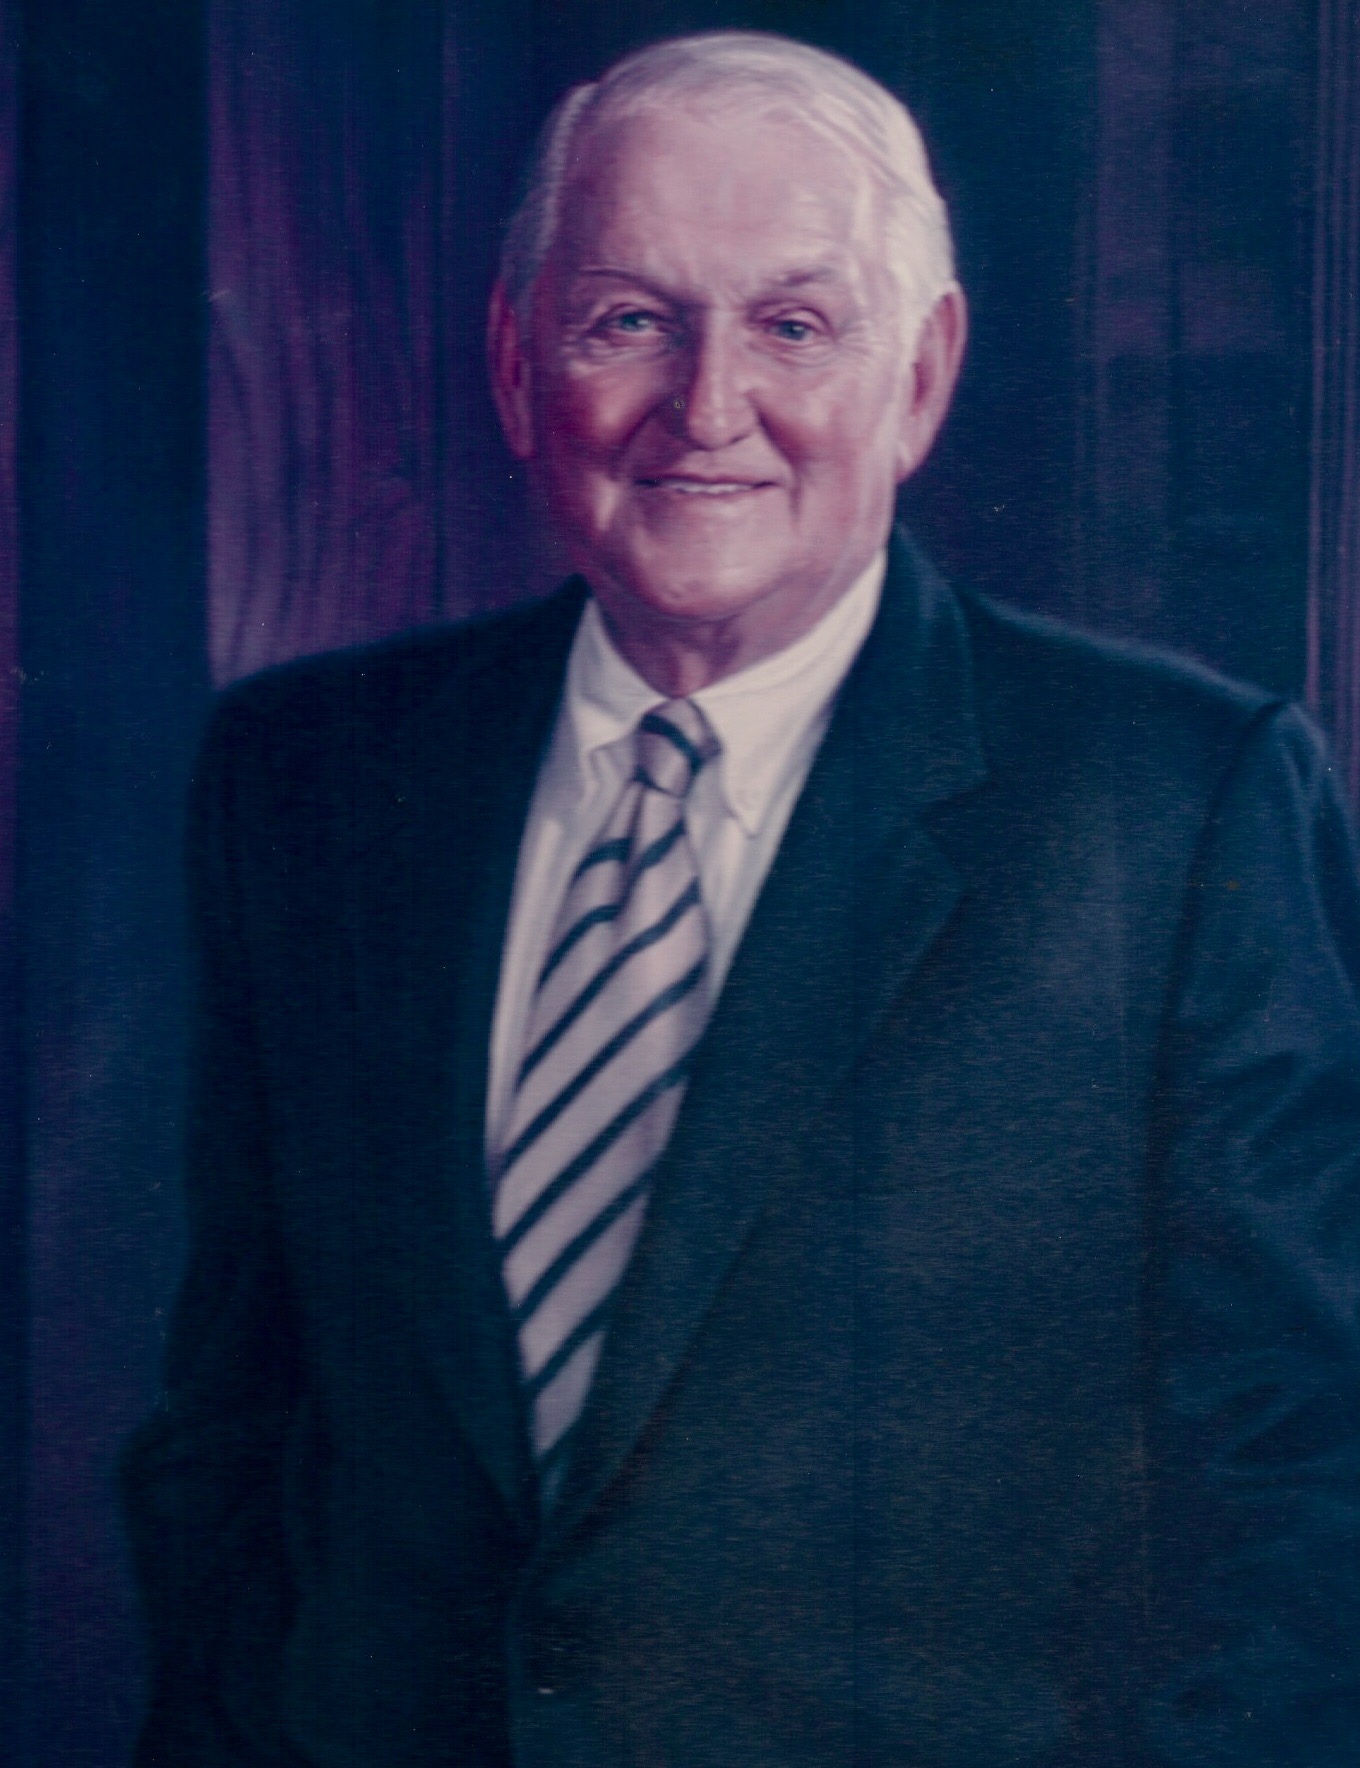 Obituary information for Douglas J. MacMaster, Jr.